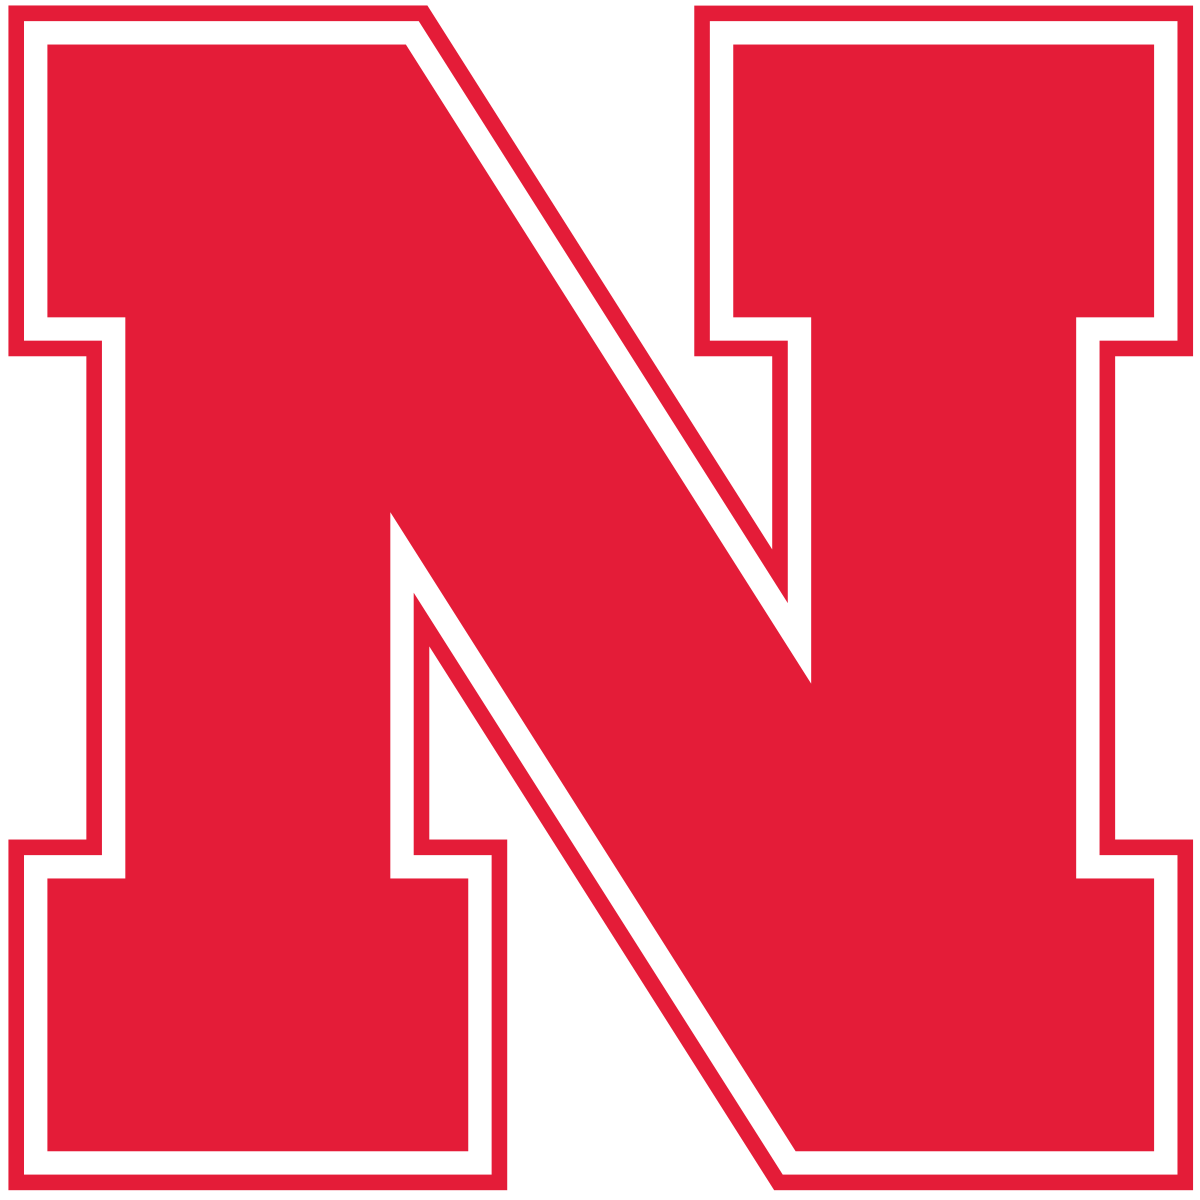 University of Nebraska - Lincoln